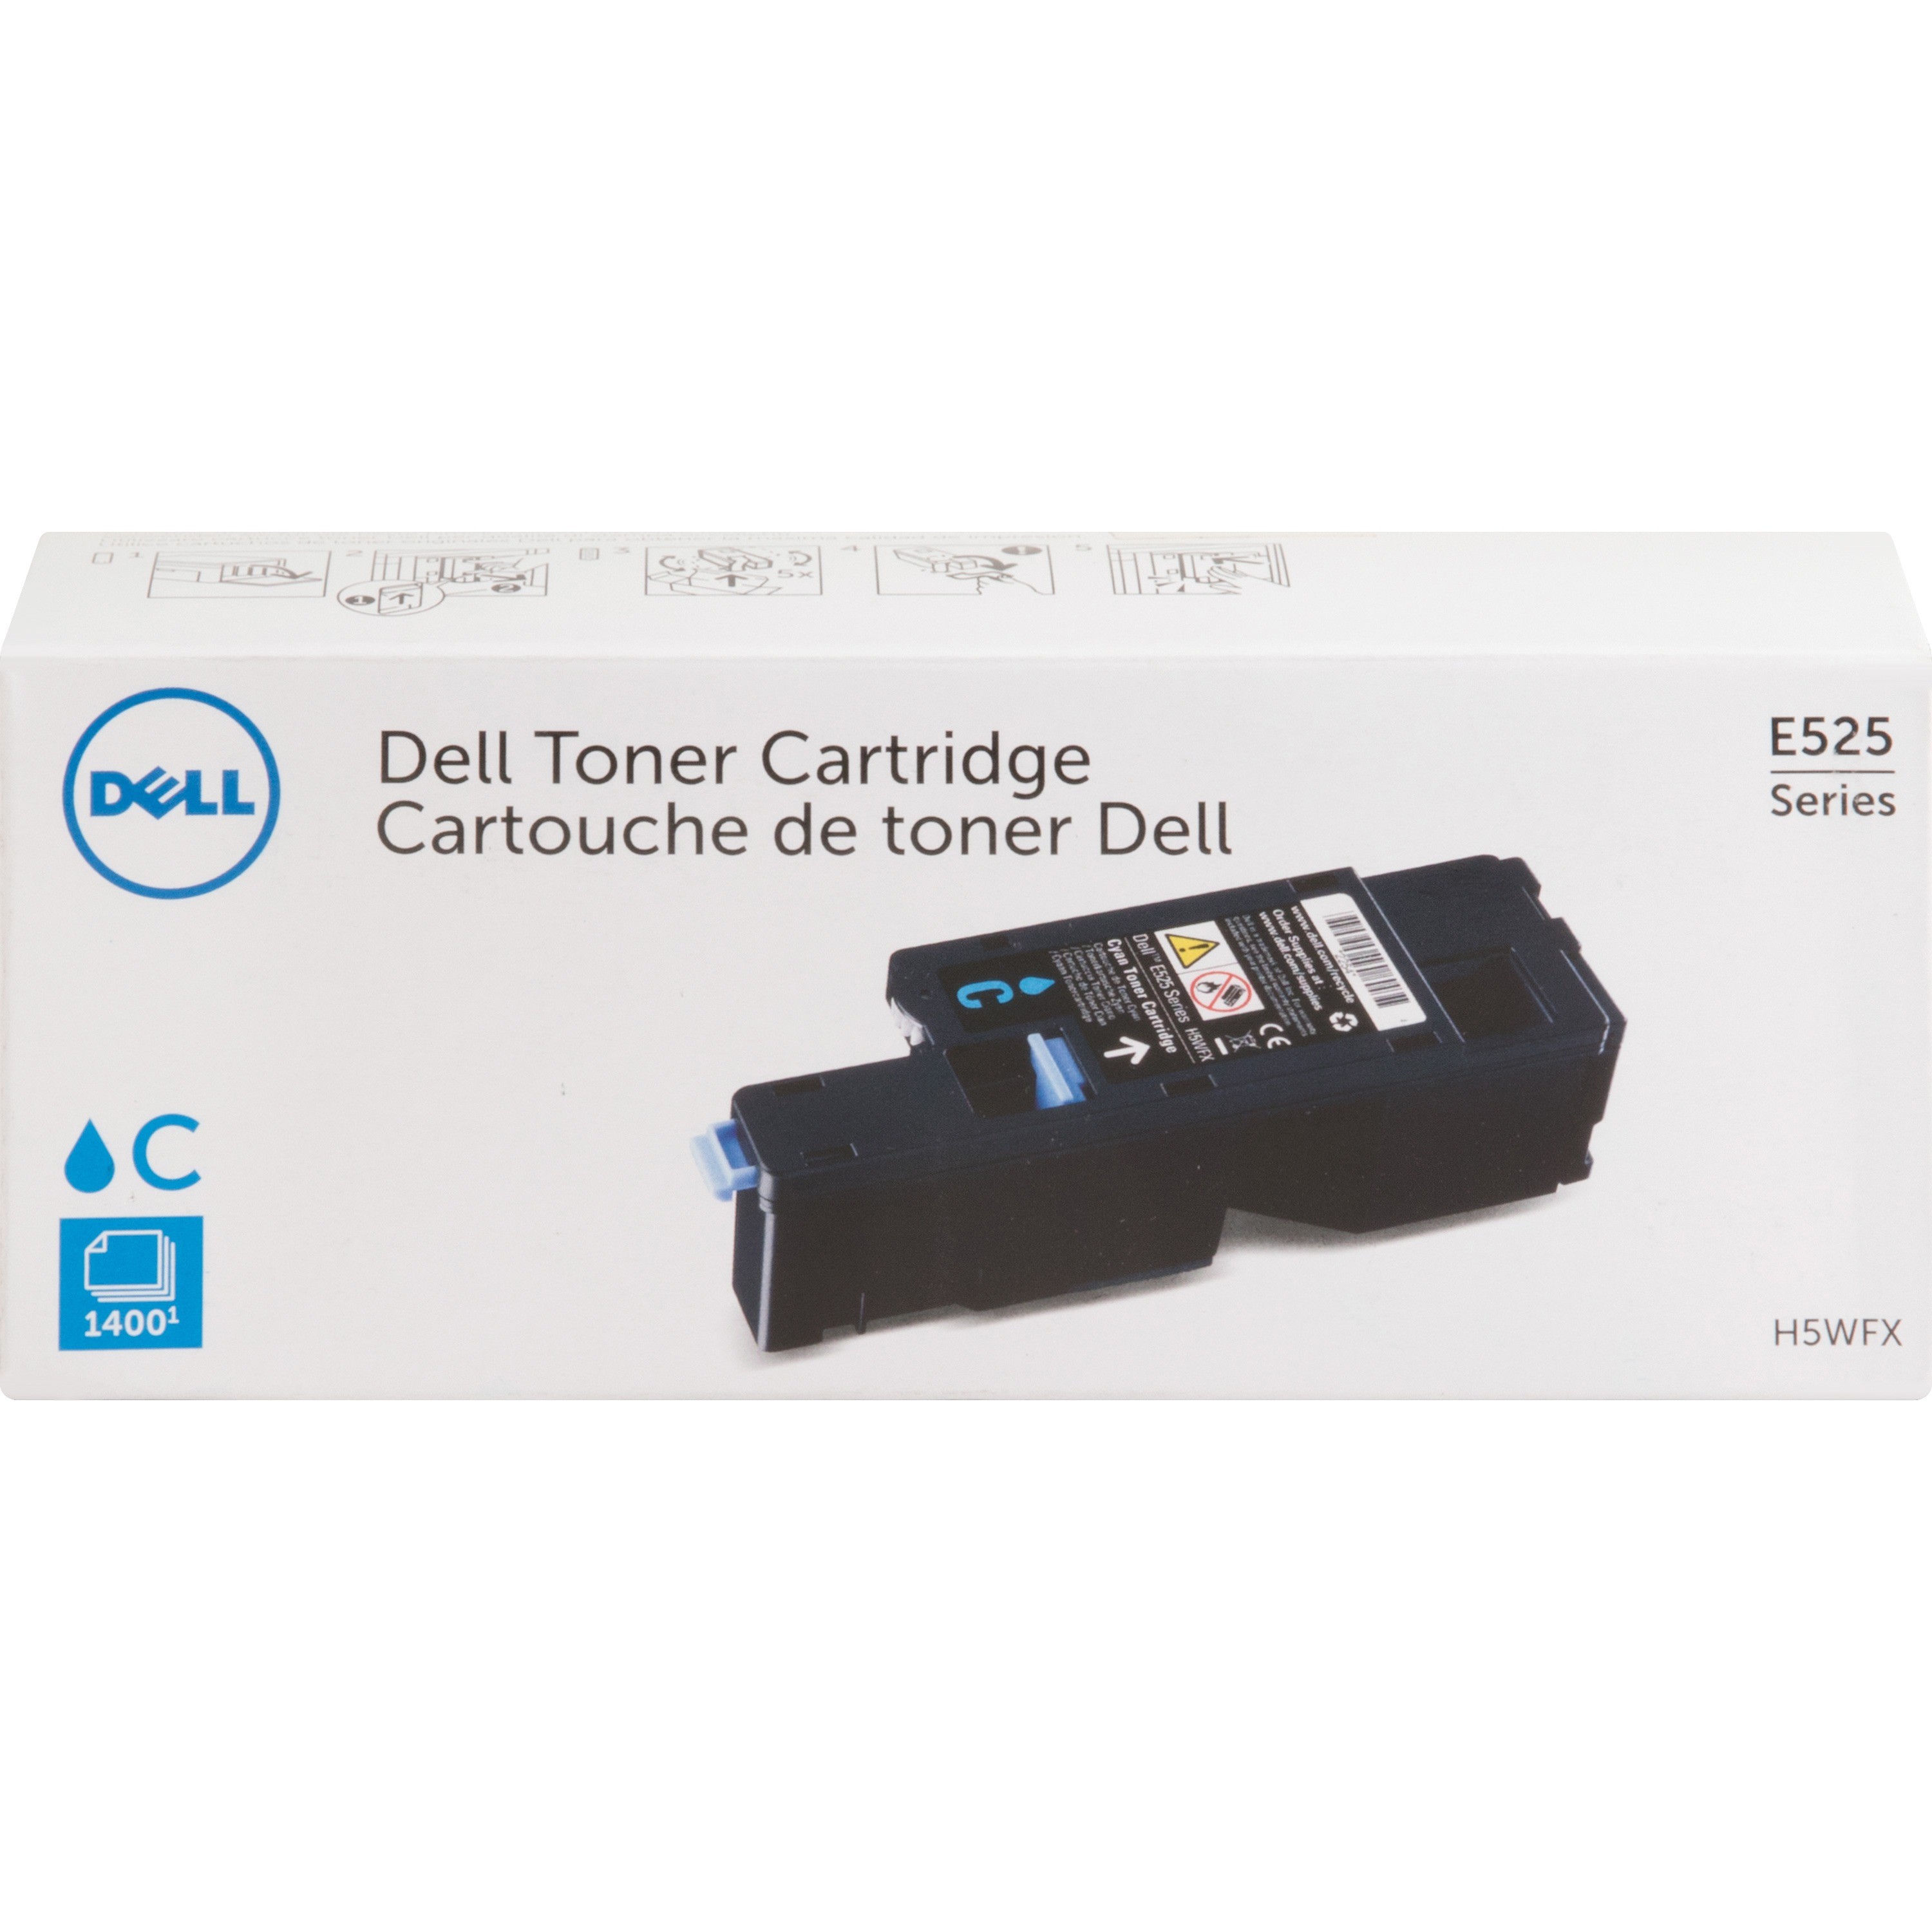 Dell Original Toner Cartridge